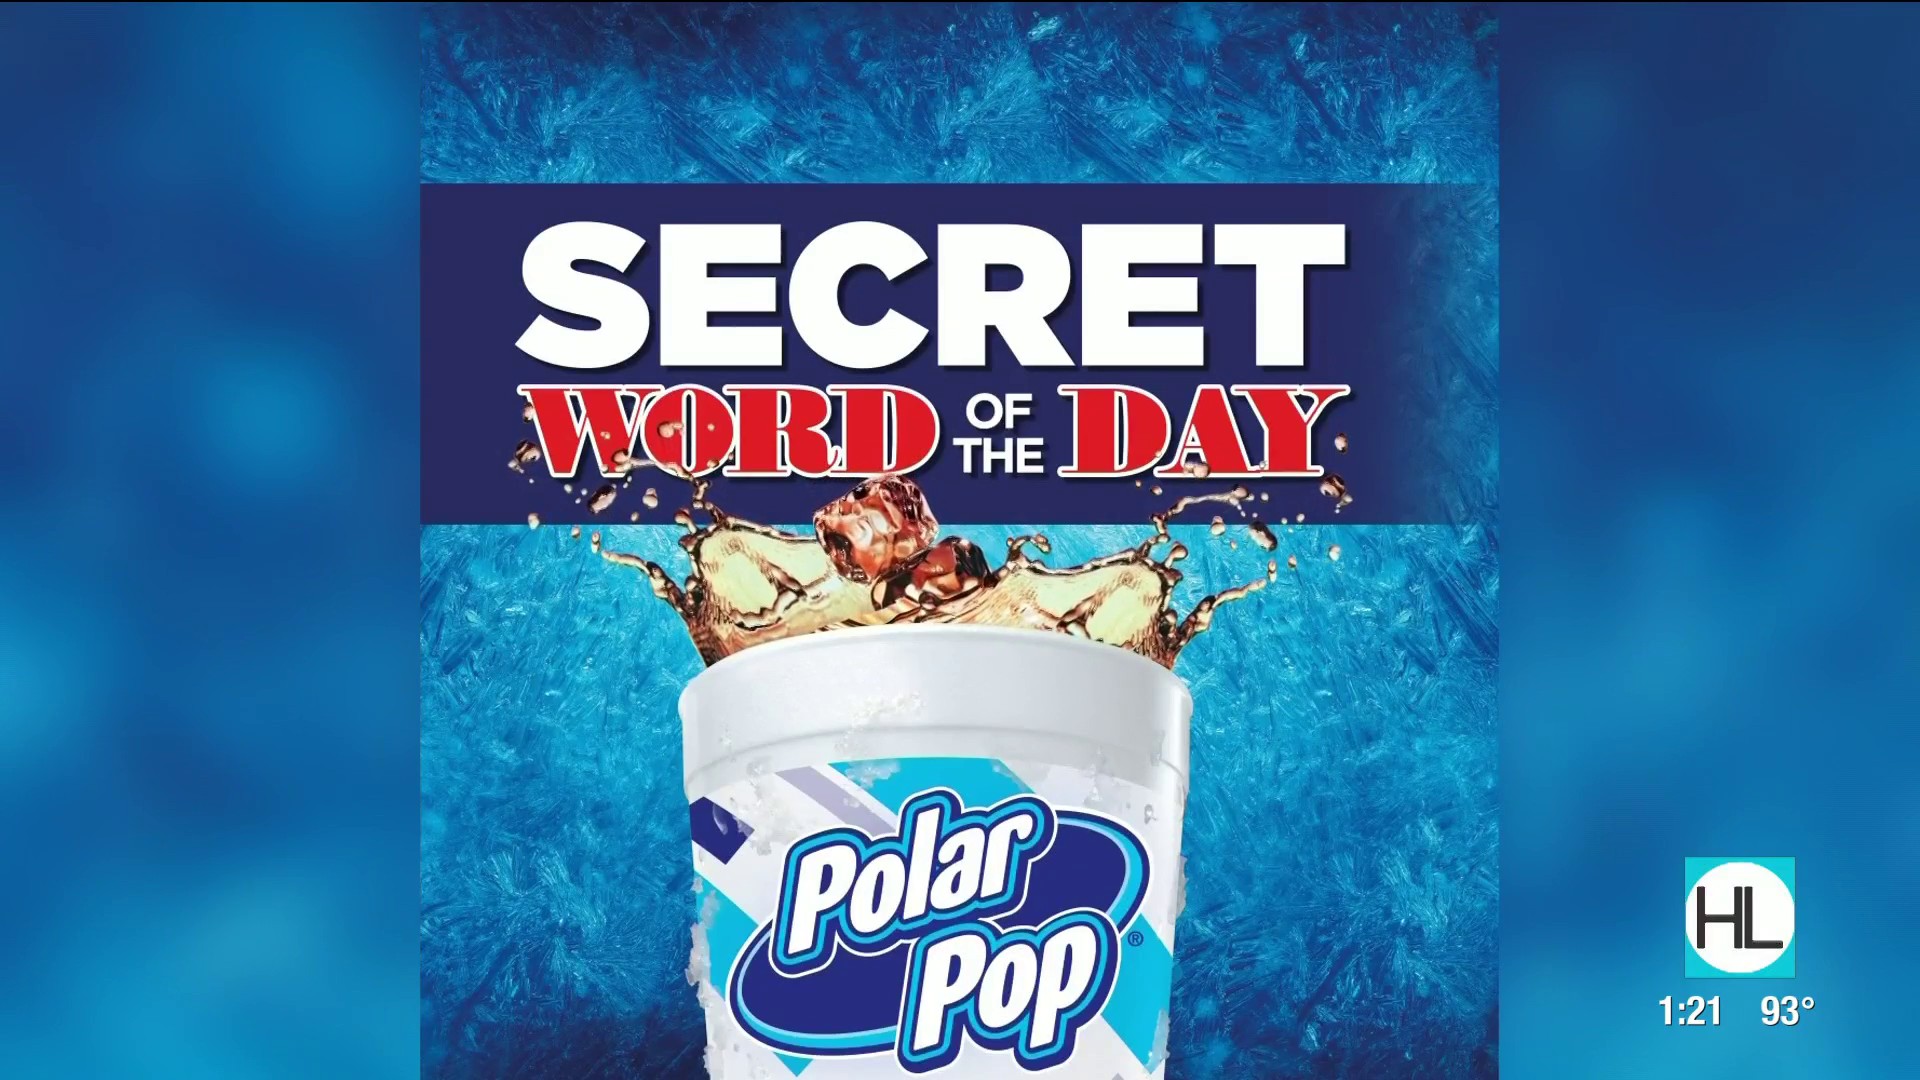 polar pop logo